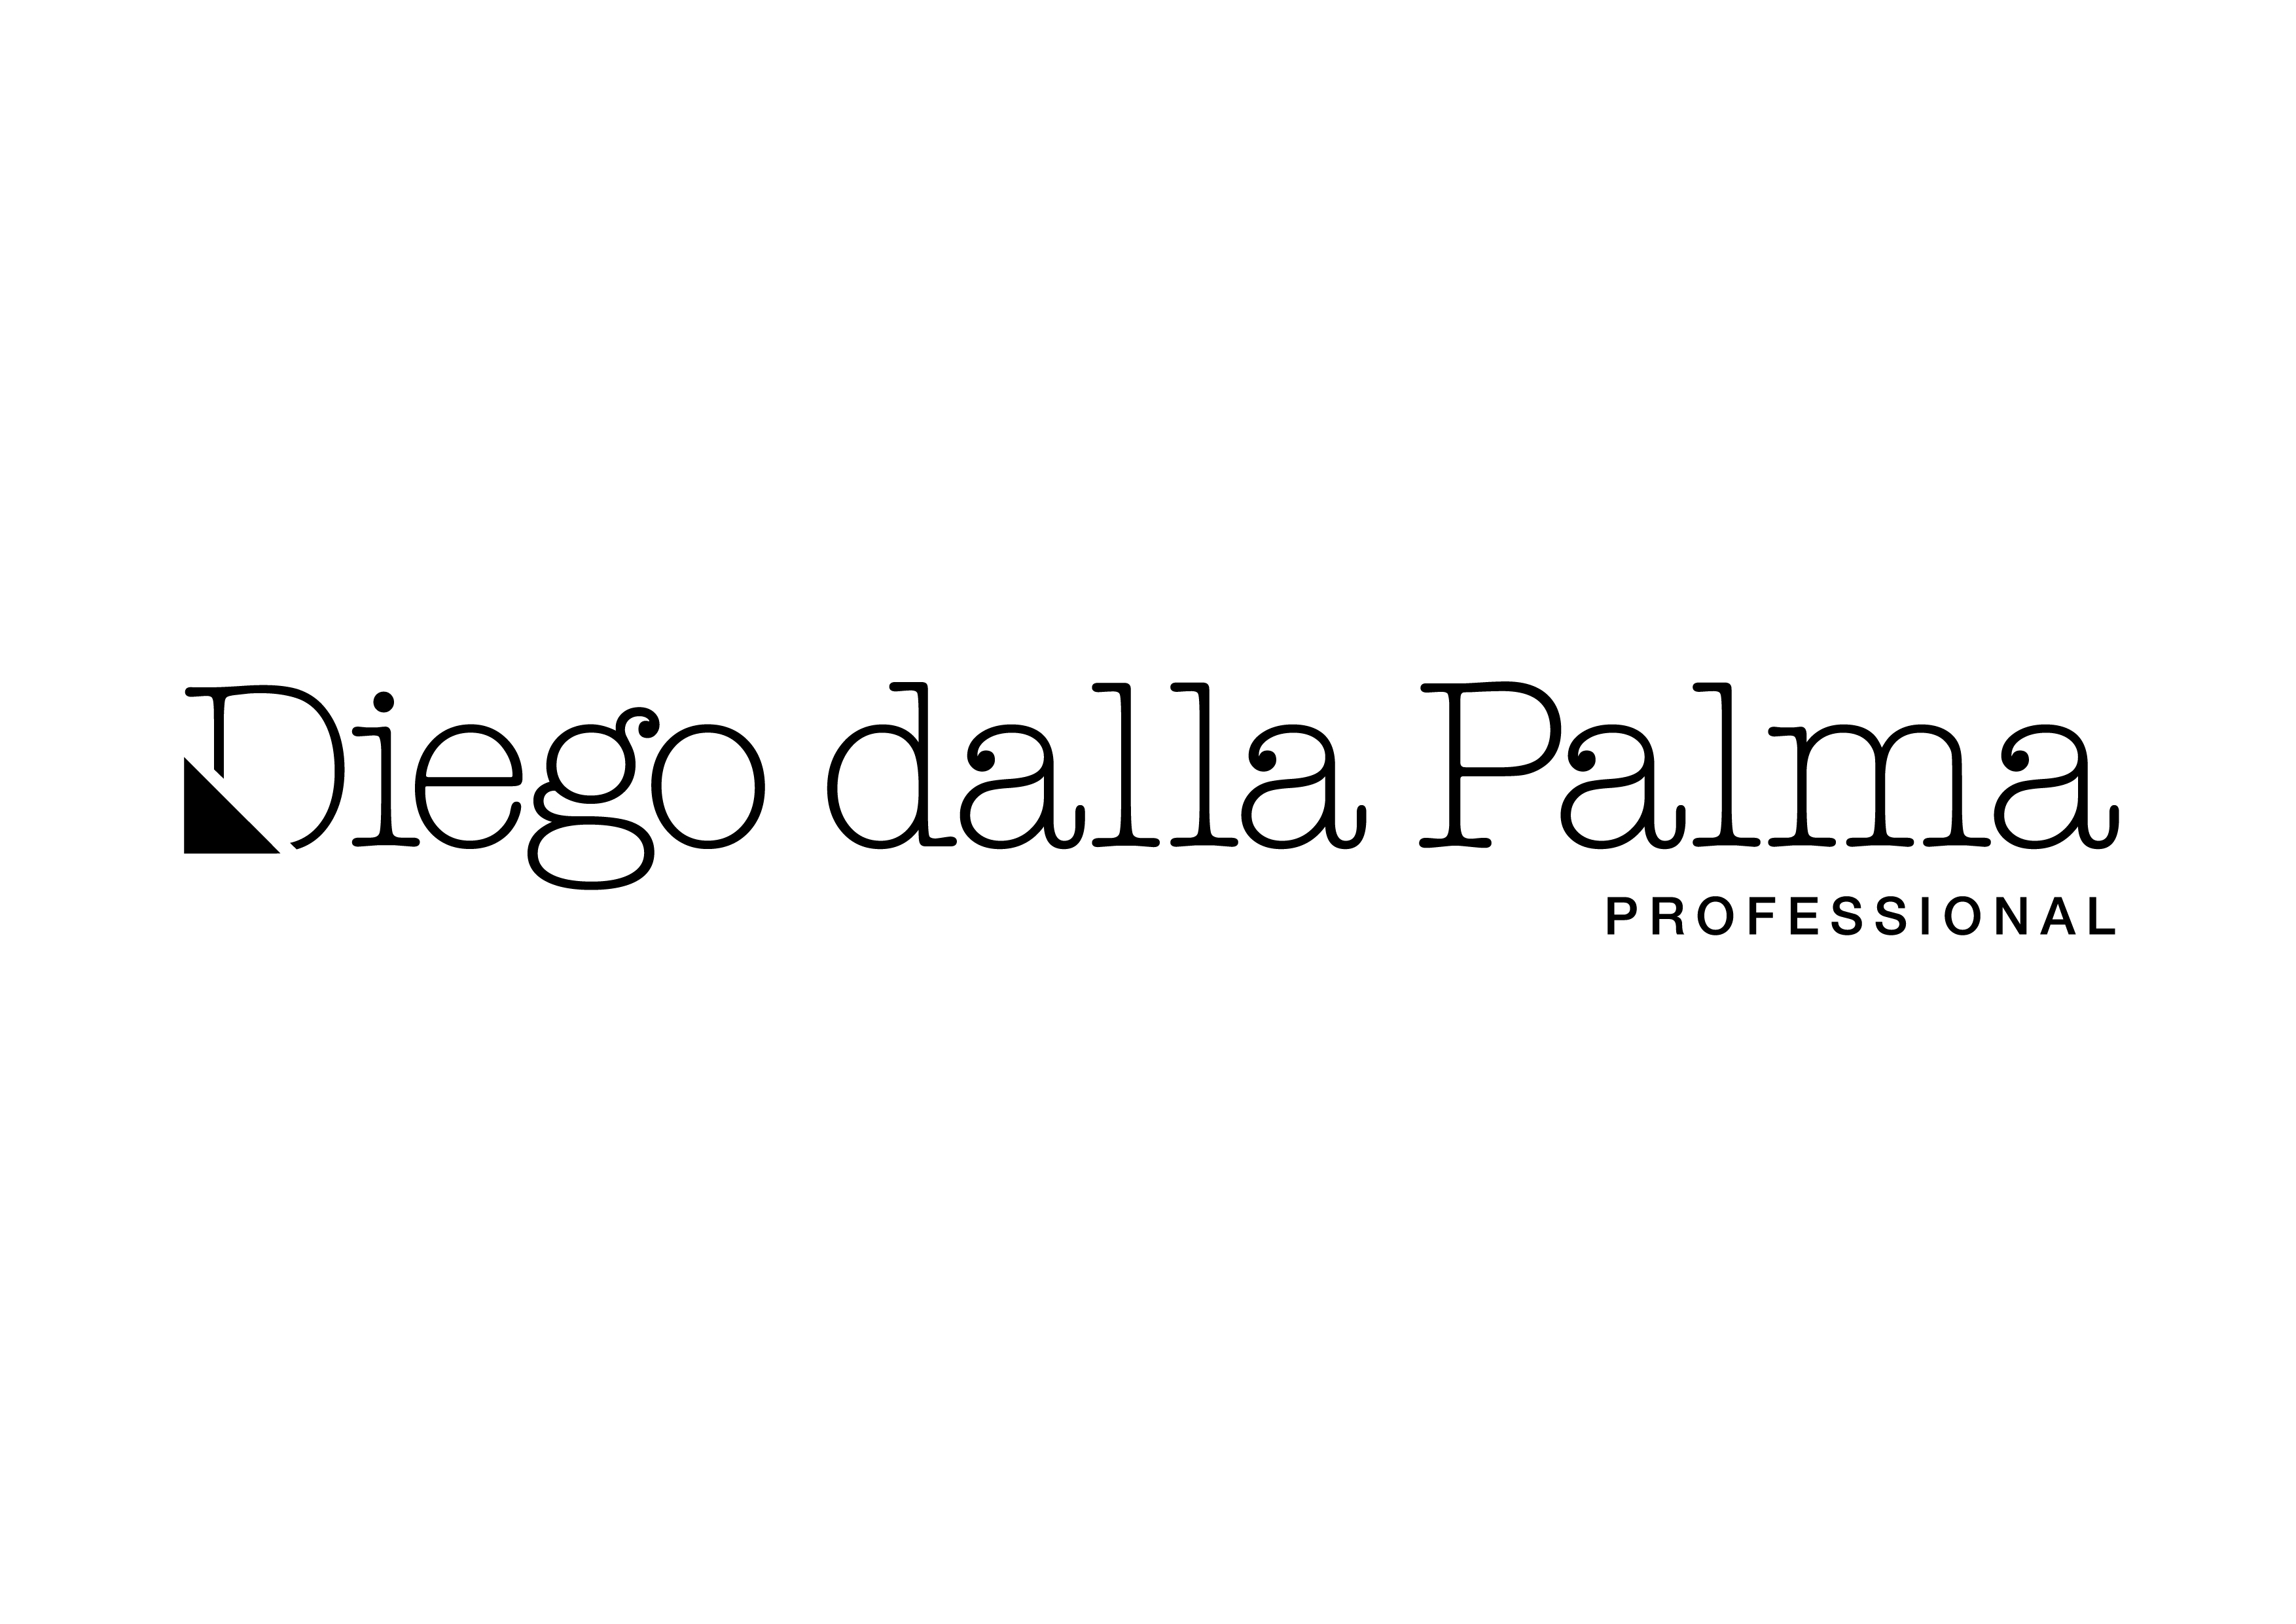 Diego dalla Palma Professional Logo